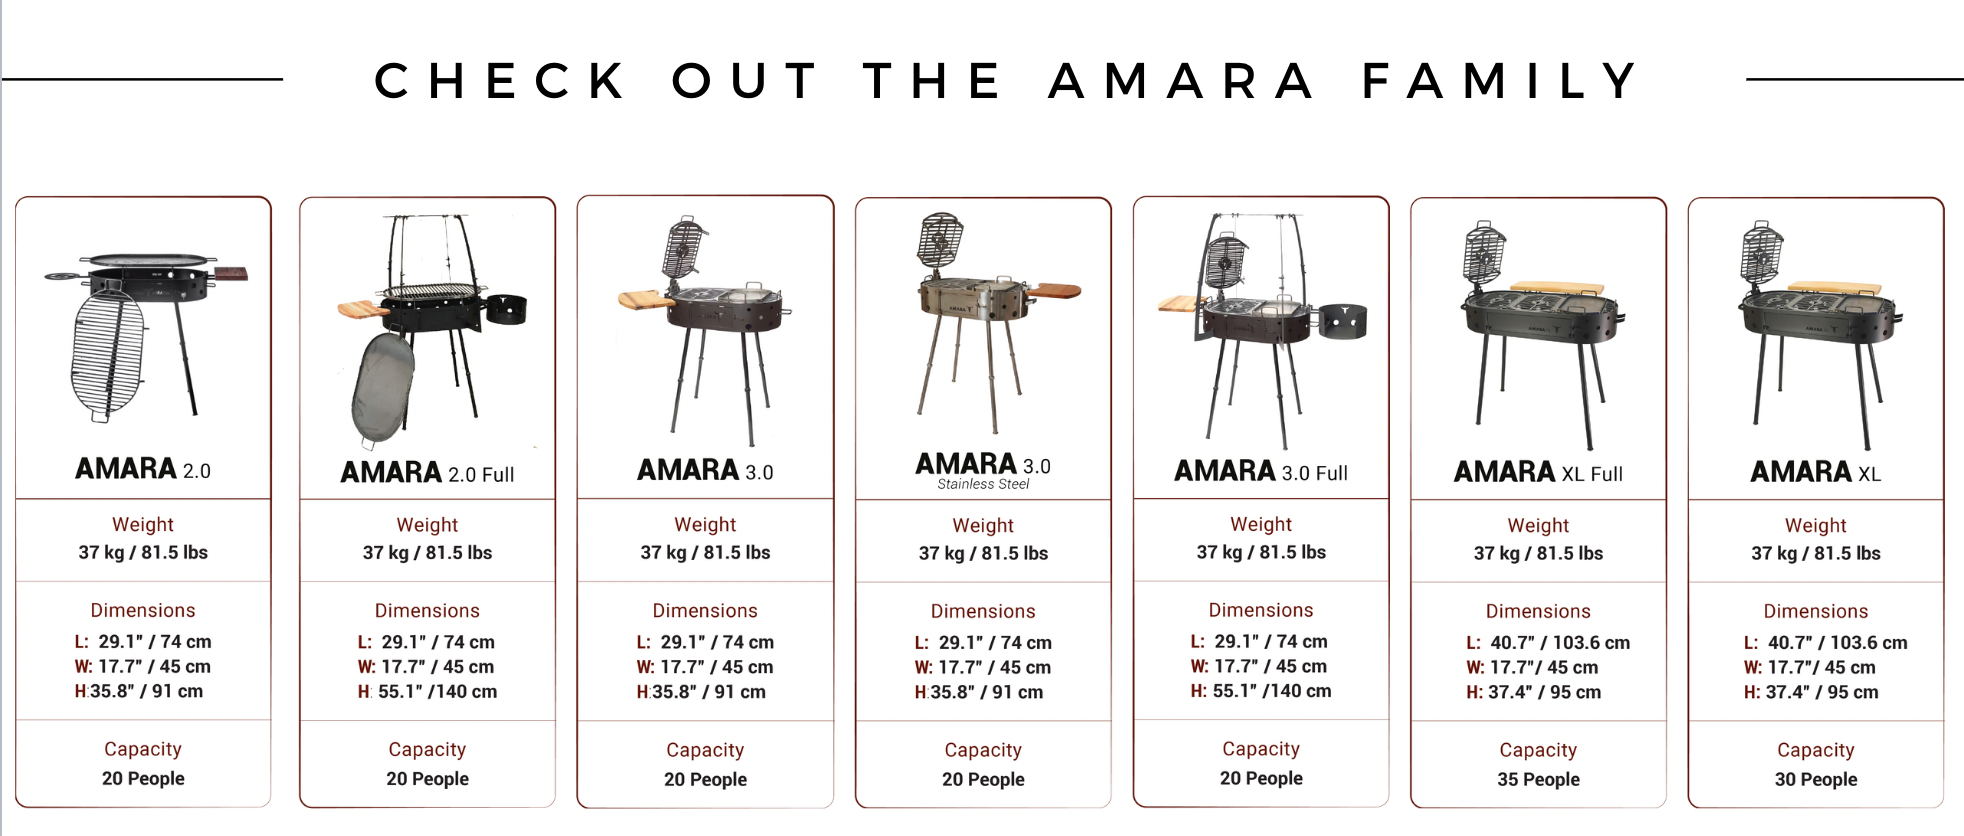 Kankay: The Amara Family banner